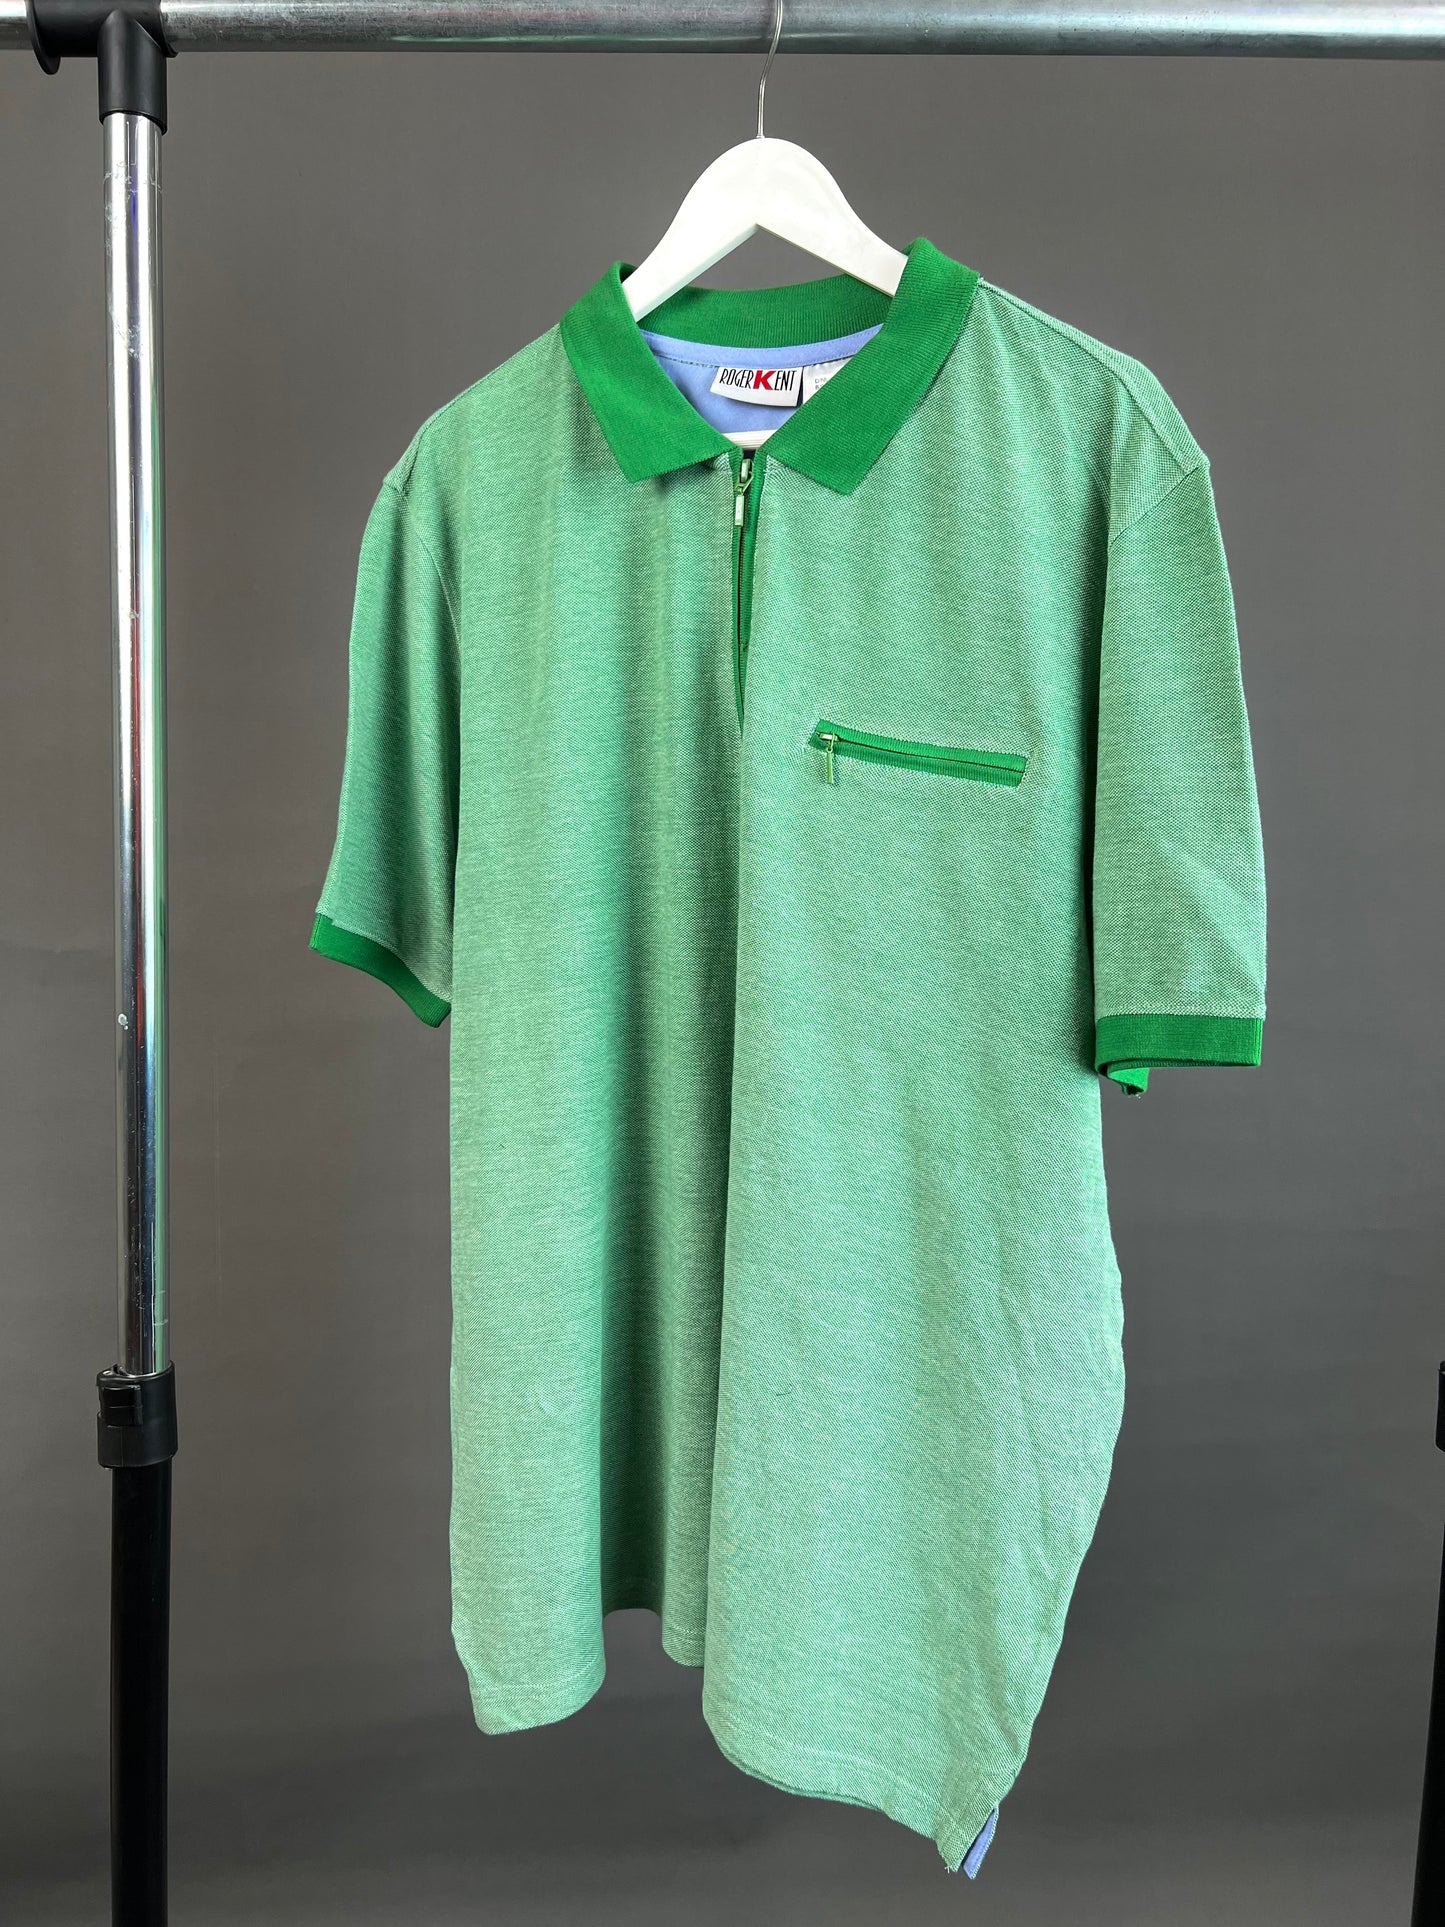 RogerKent polo shirt in green